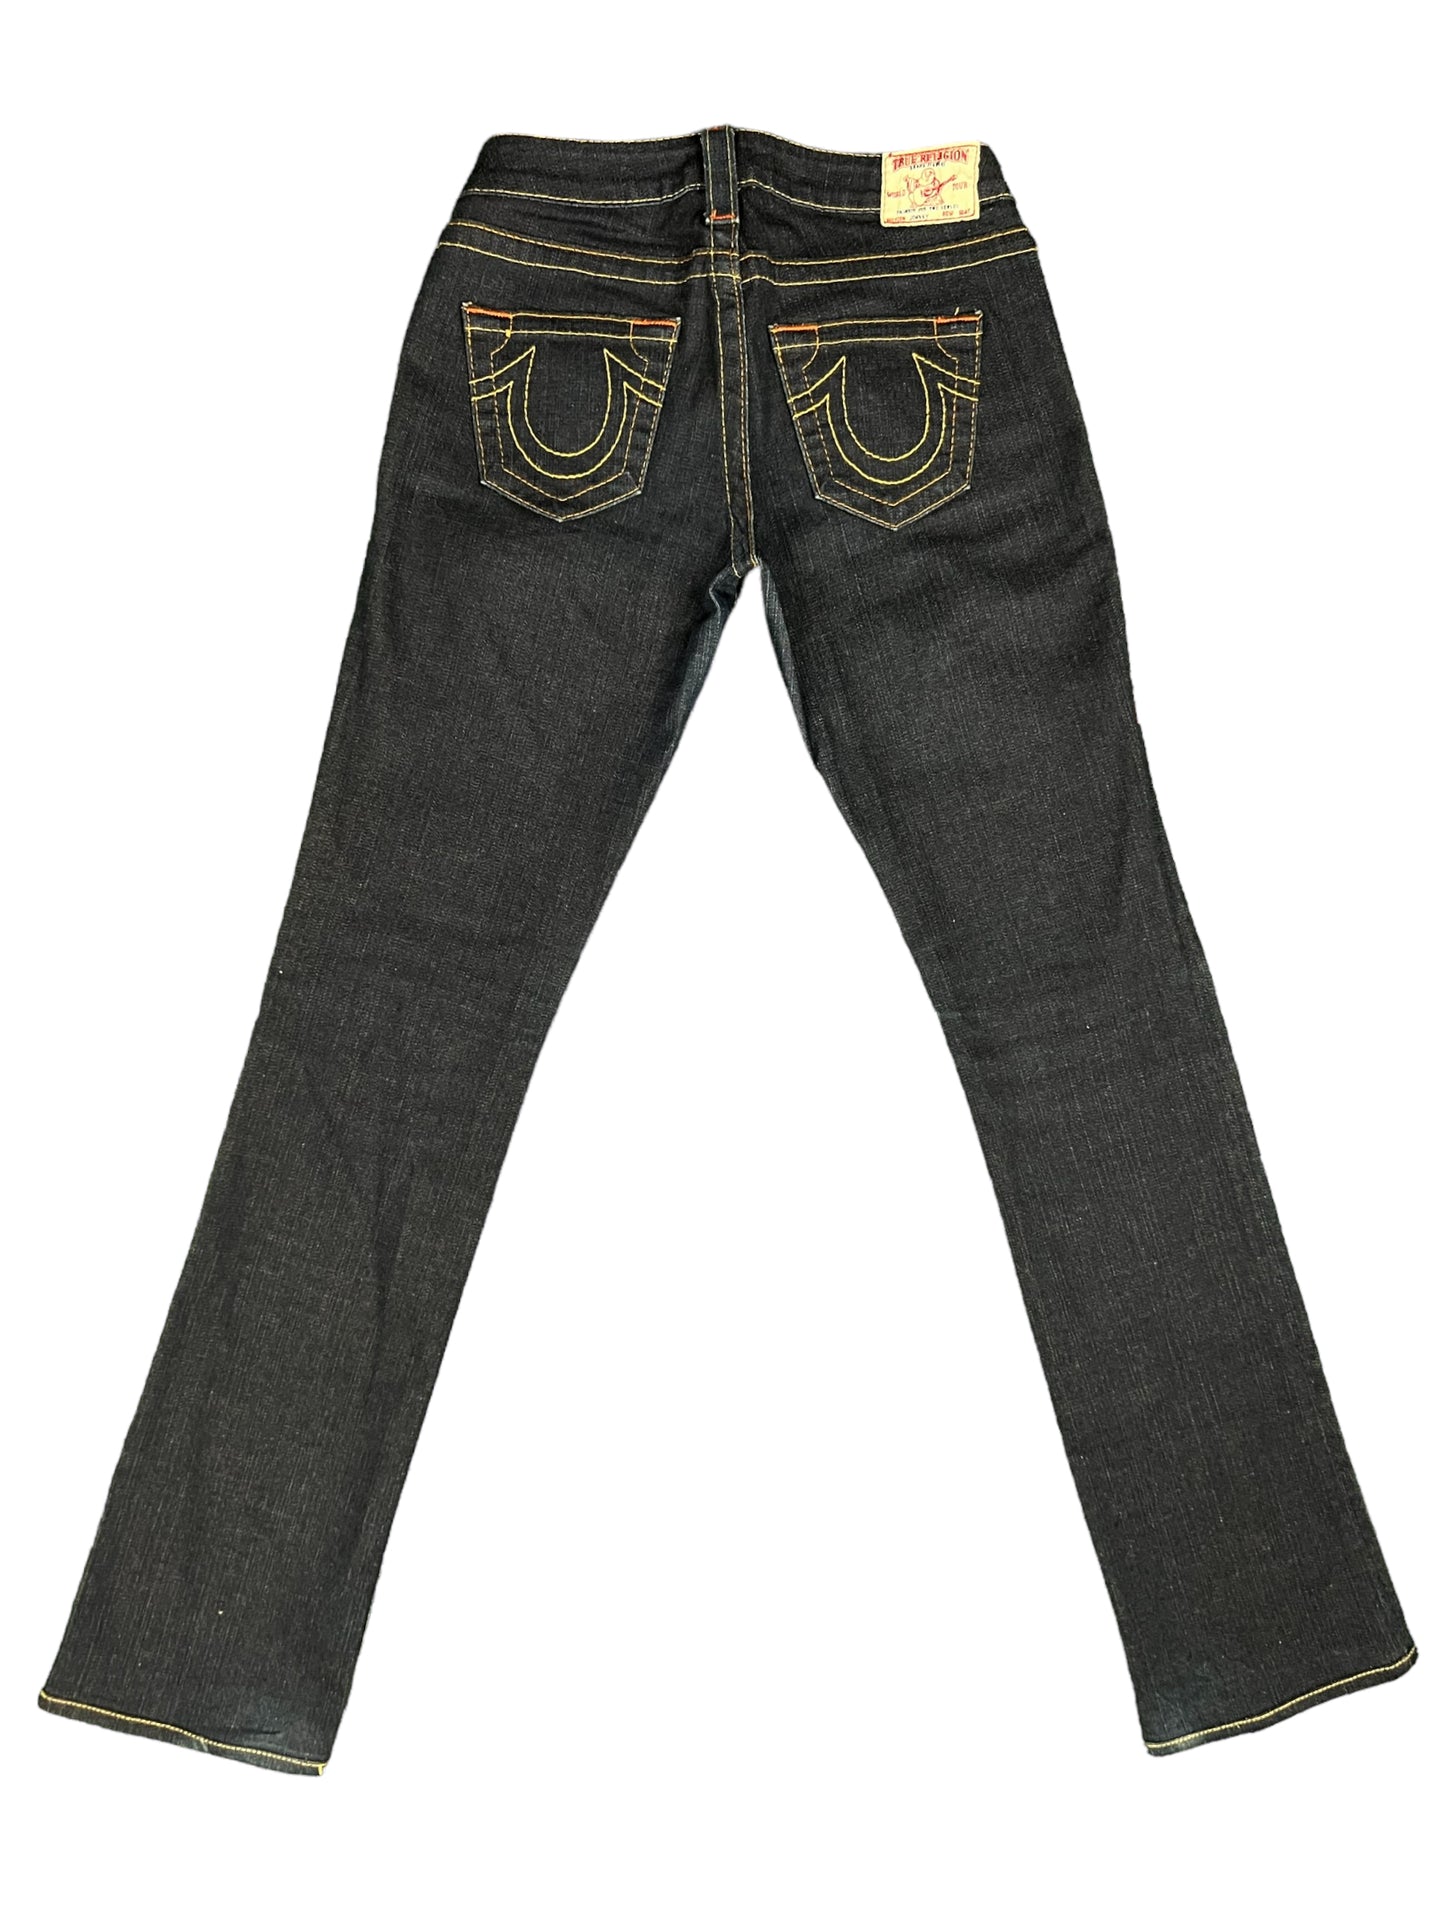 Vintage True Religion Johnny Jeans